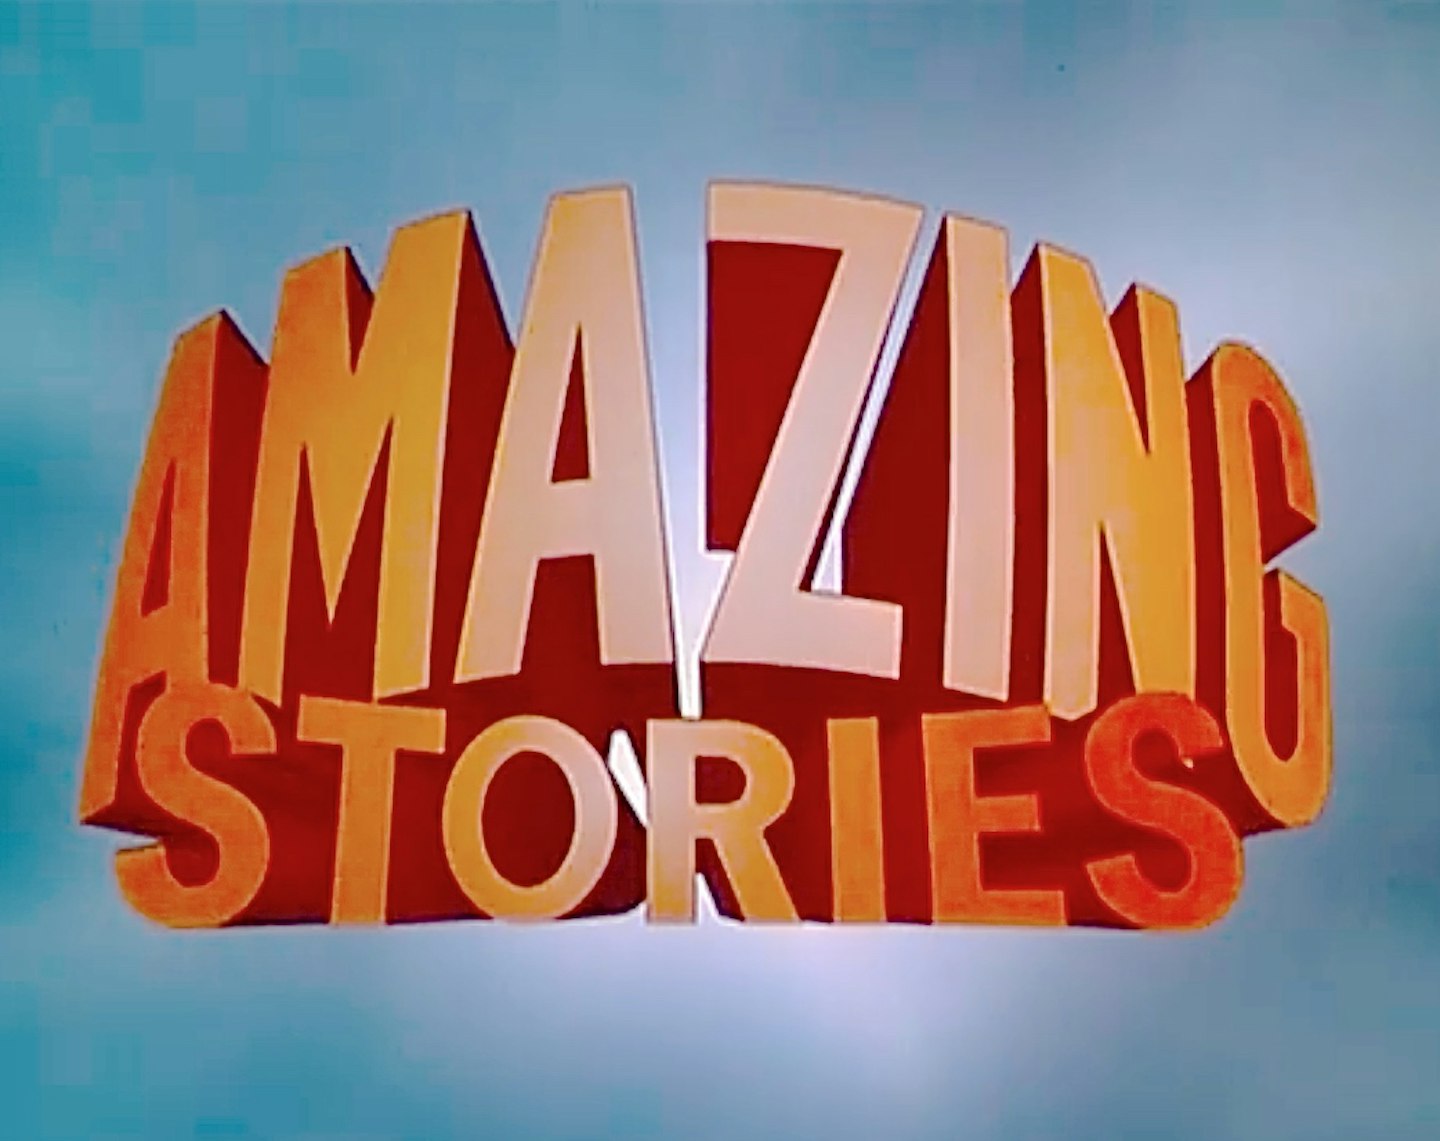 Amazing Stories (original) title